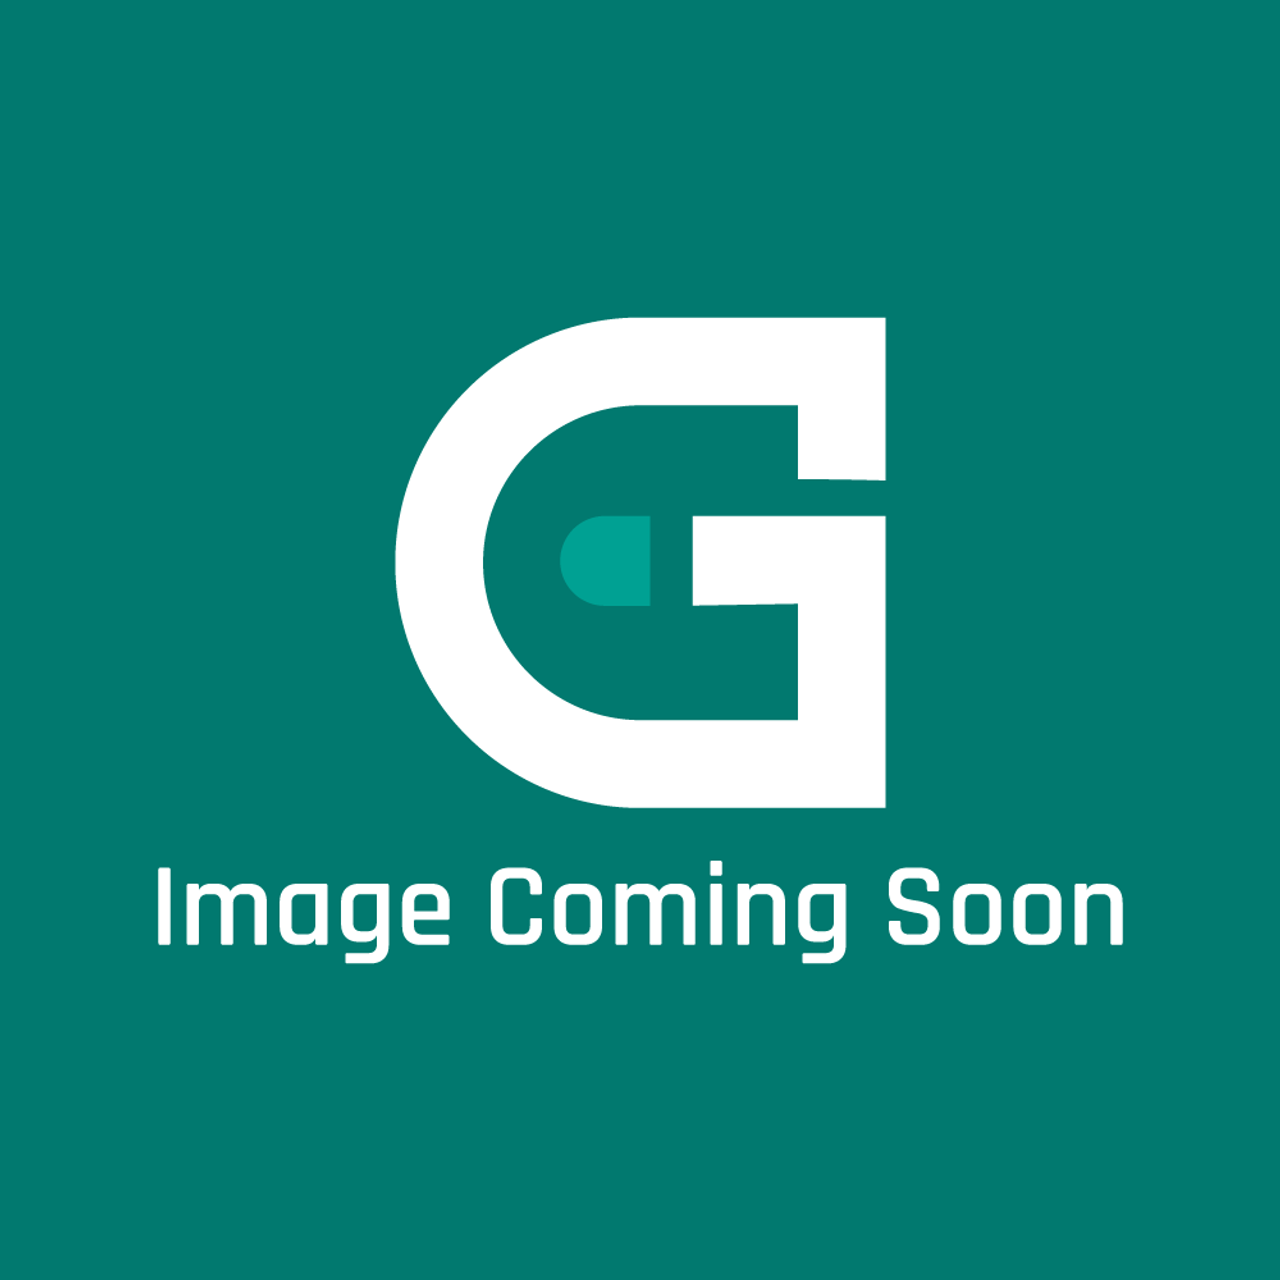 LG 0CN1020K519 - Capacitor,Ceramic,Axial - Image Coming Soon!